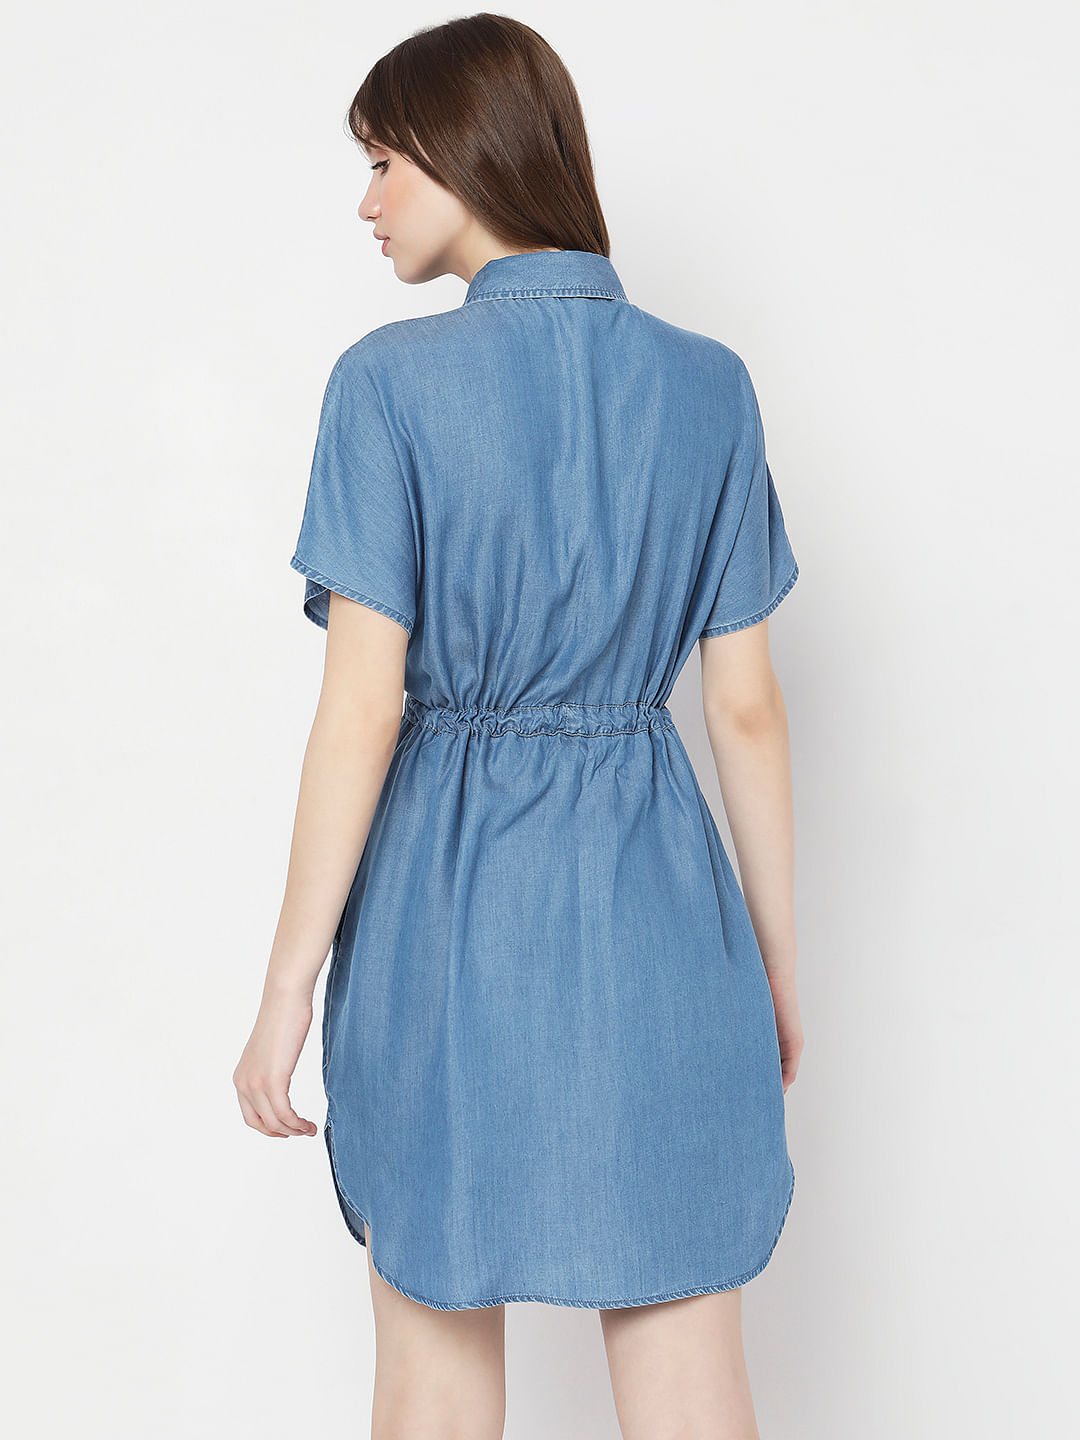 Denim Shirt Dress in Light Blue – FreeSpirits Fashion